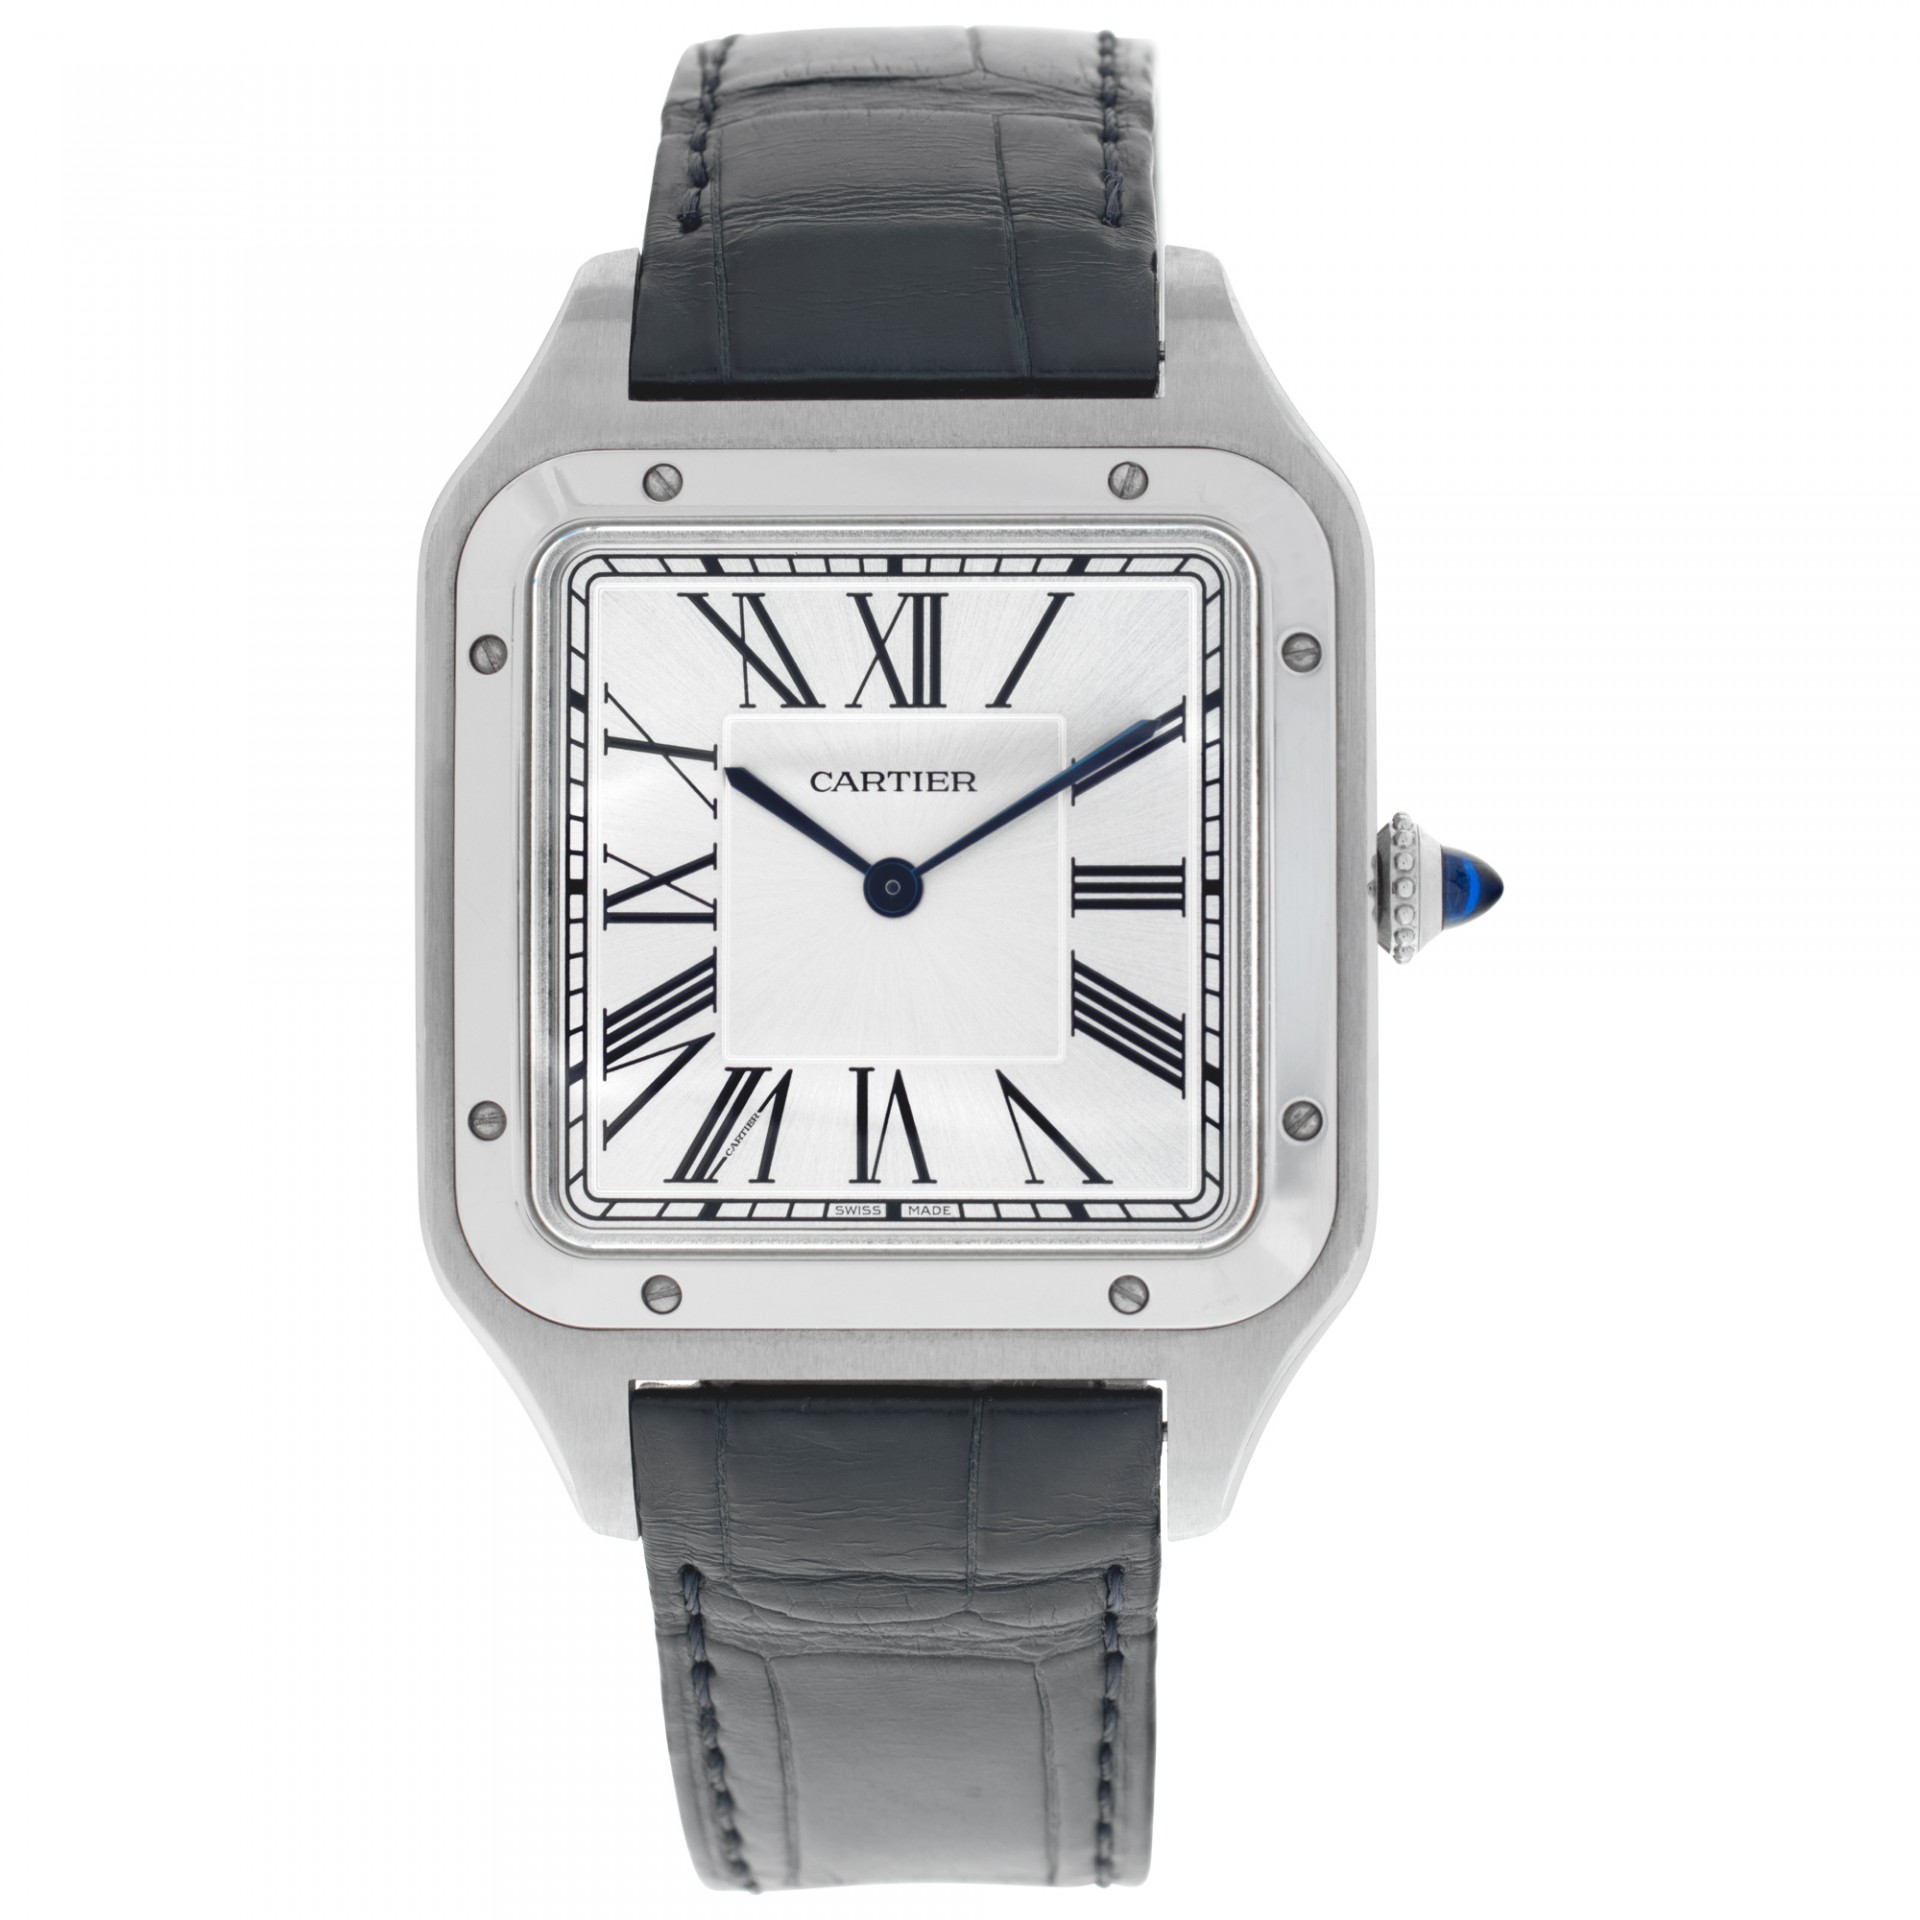 Stainless steel Santos-Dumont watch
